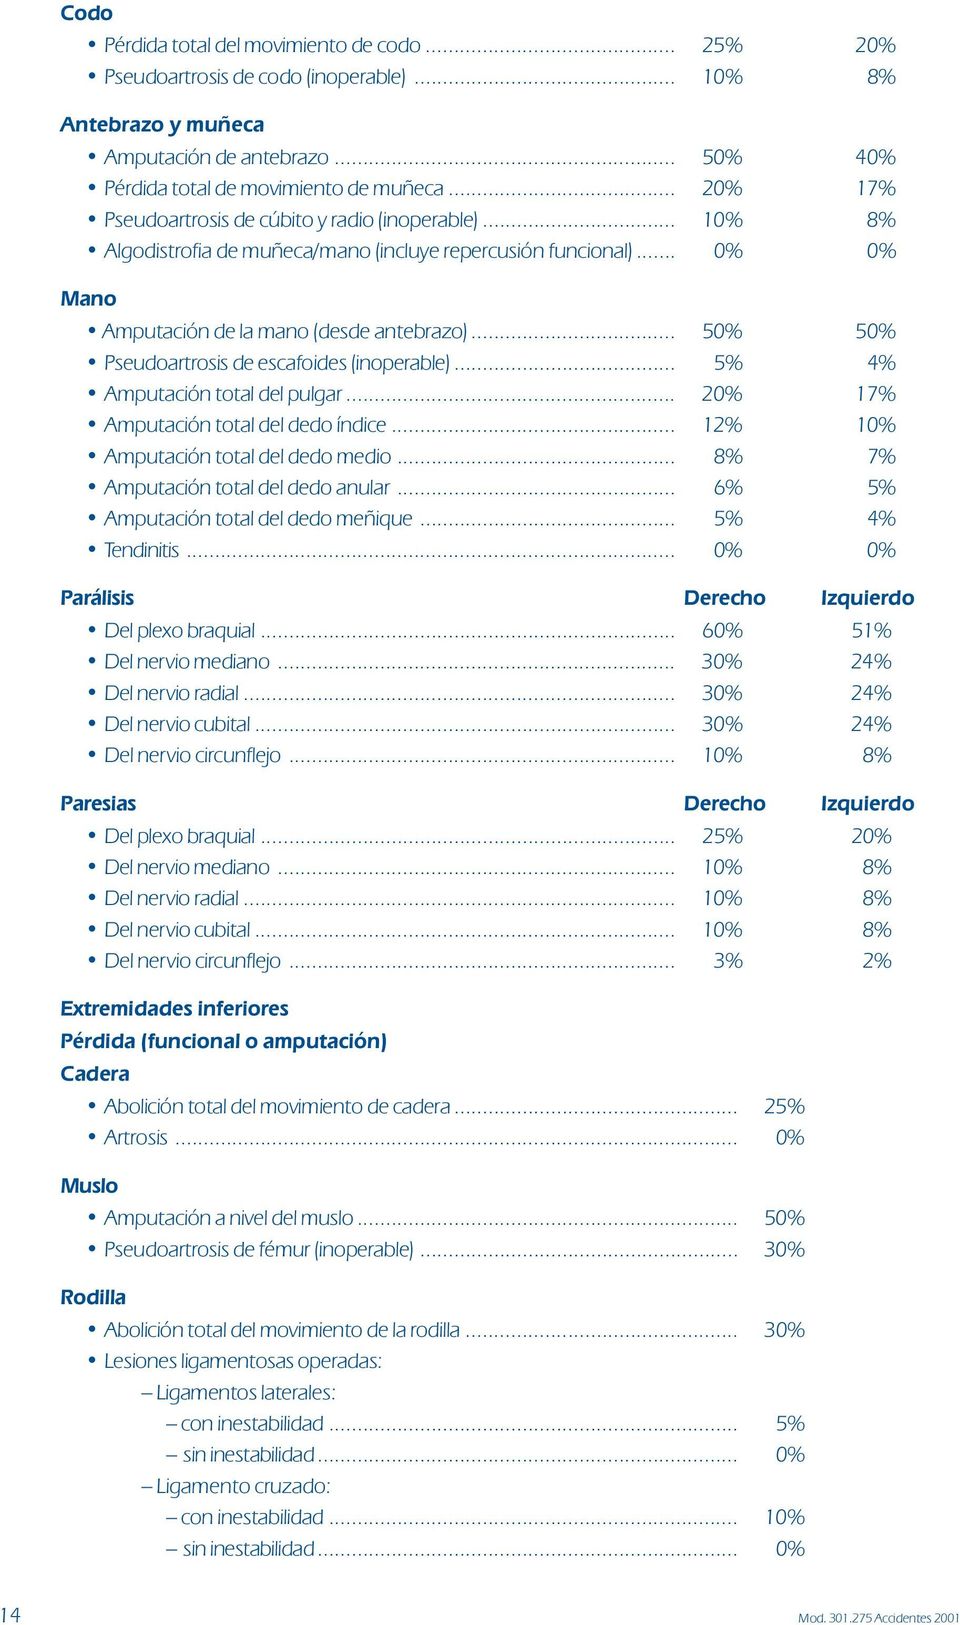 .. 50% 50% Pseudoartrosis de escafoides (inoperable)... 5% 4% Amputación total del pulgar... 20% 17% Amputación total del dedo índice... 12% 10% Amputación total del dedo medio.